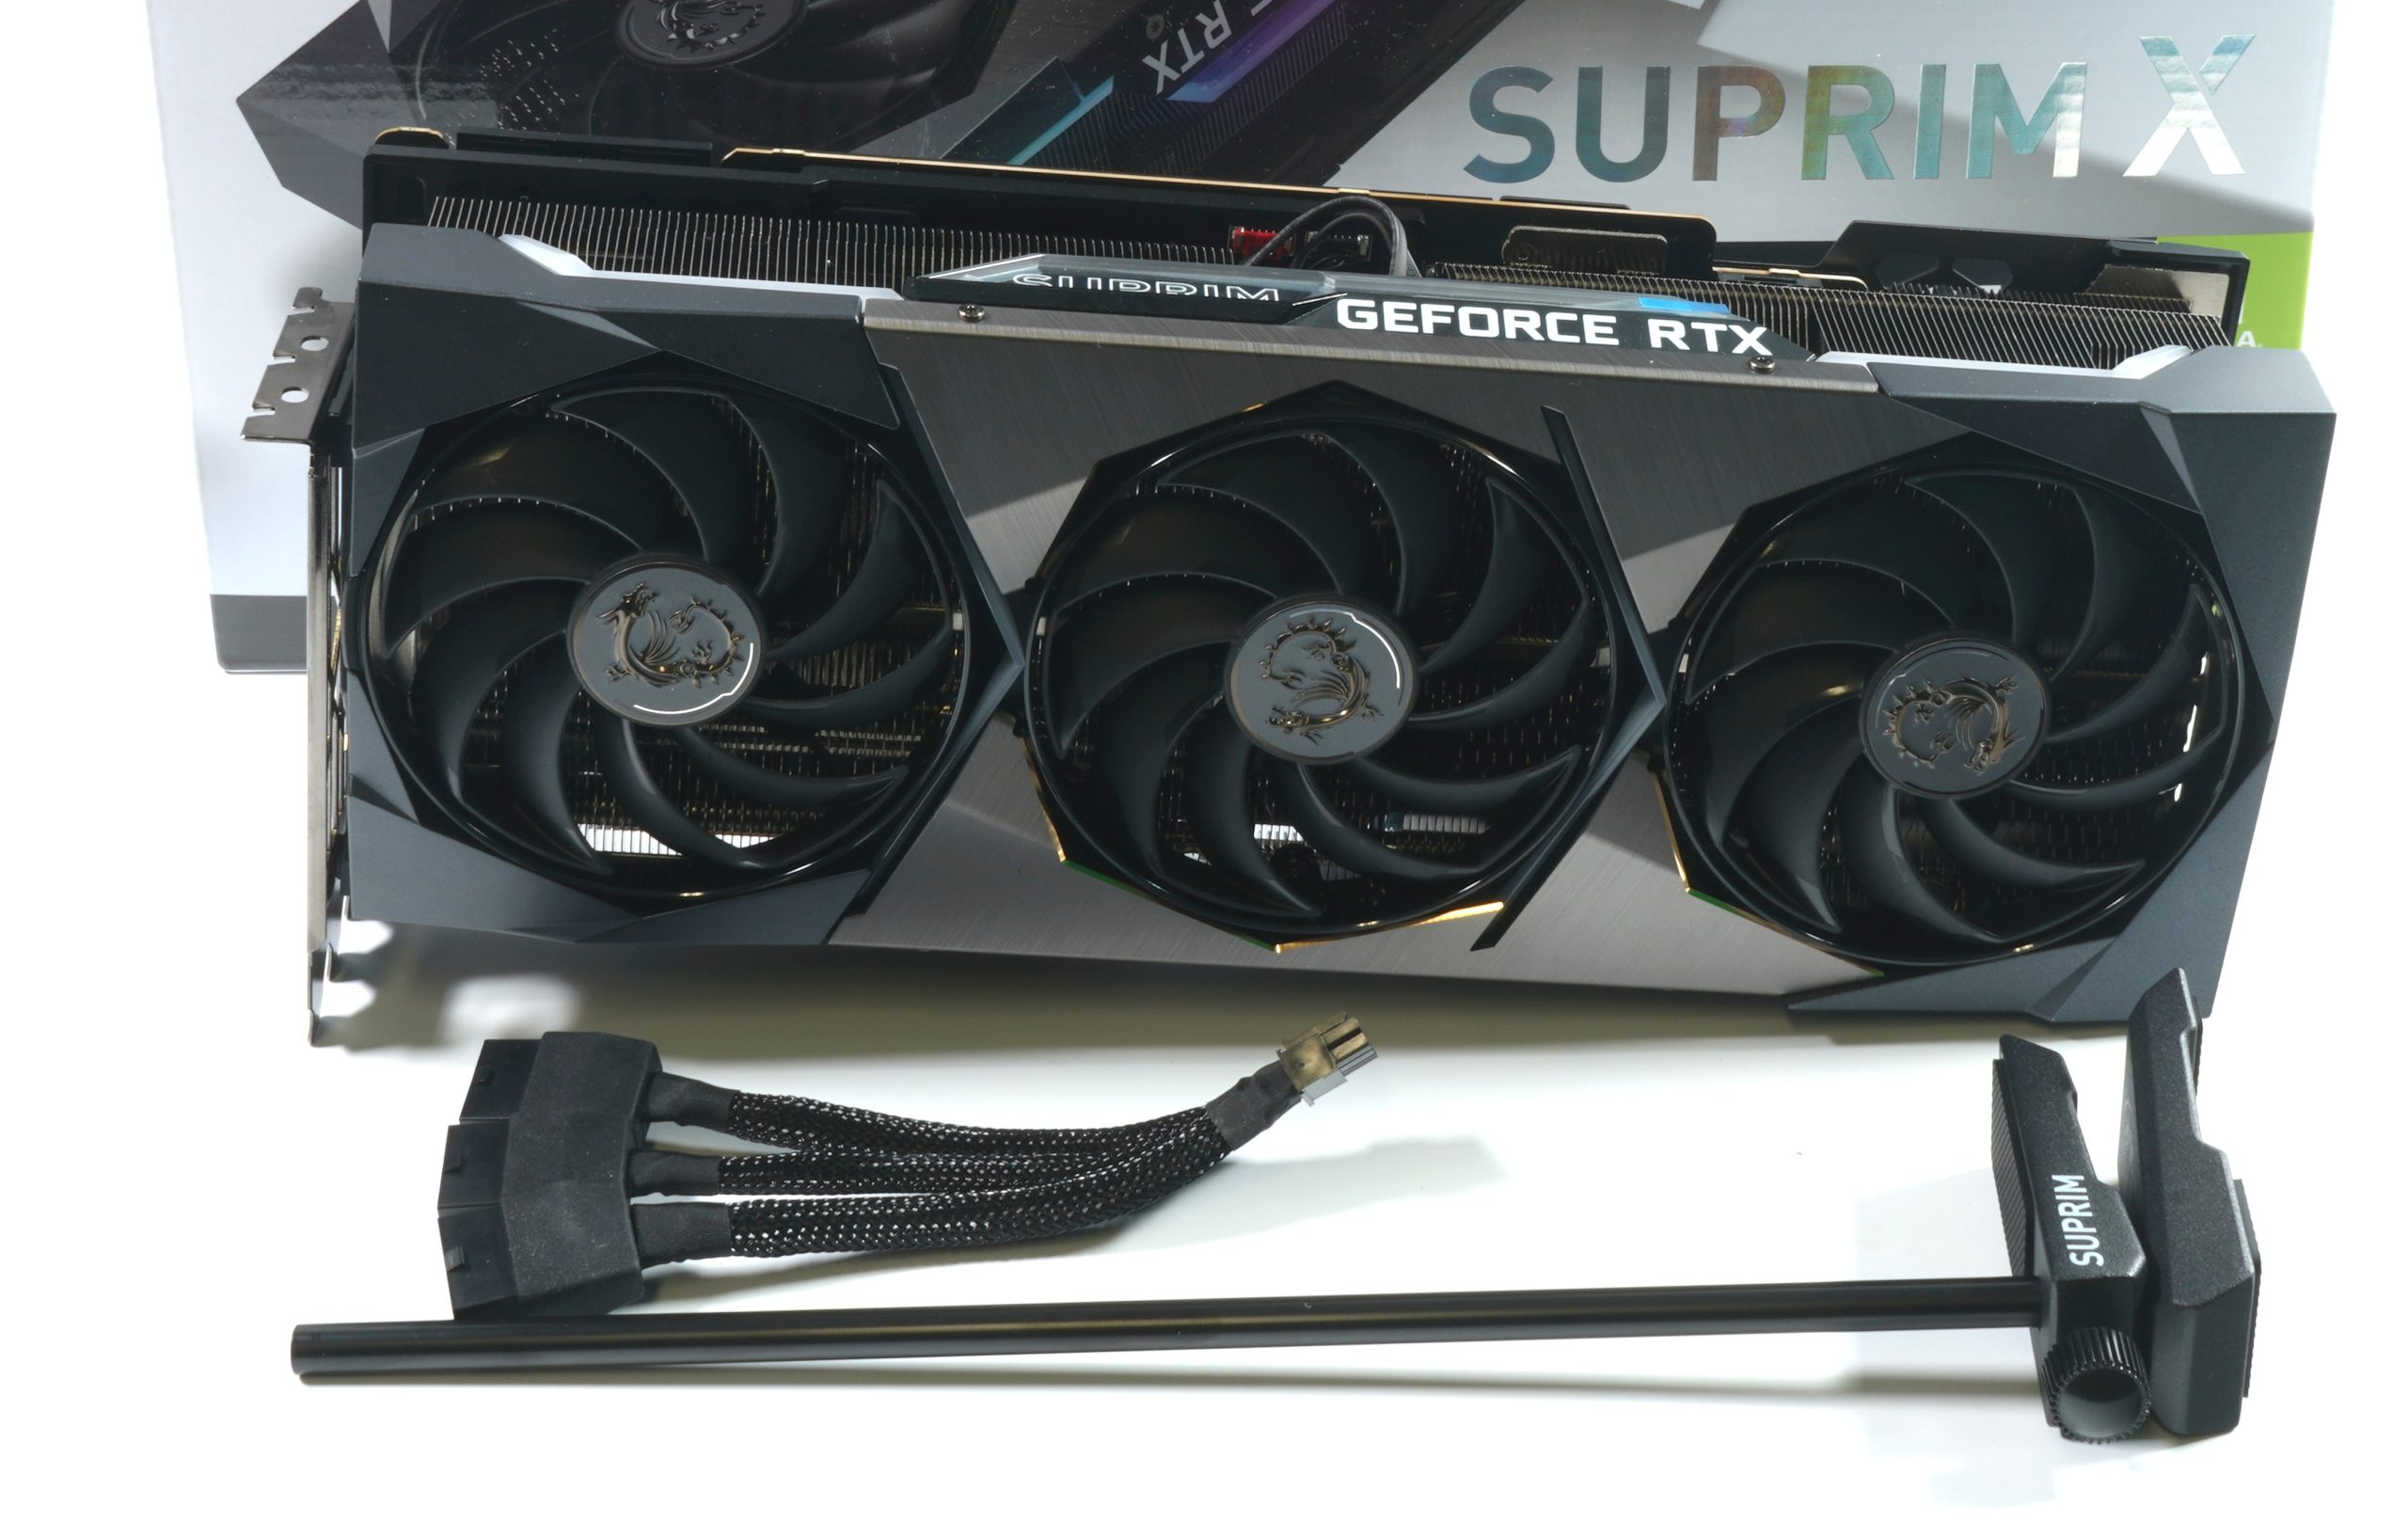 MSI GeForce RTX 3090 Ti SUPRIM X 24 GB Review - Hot potato, RTX